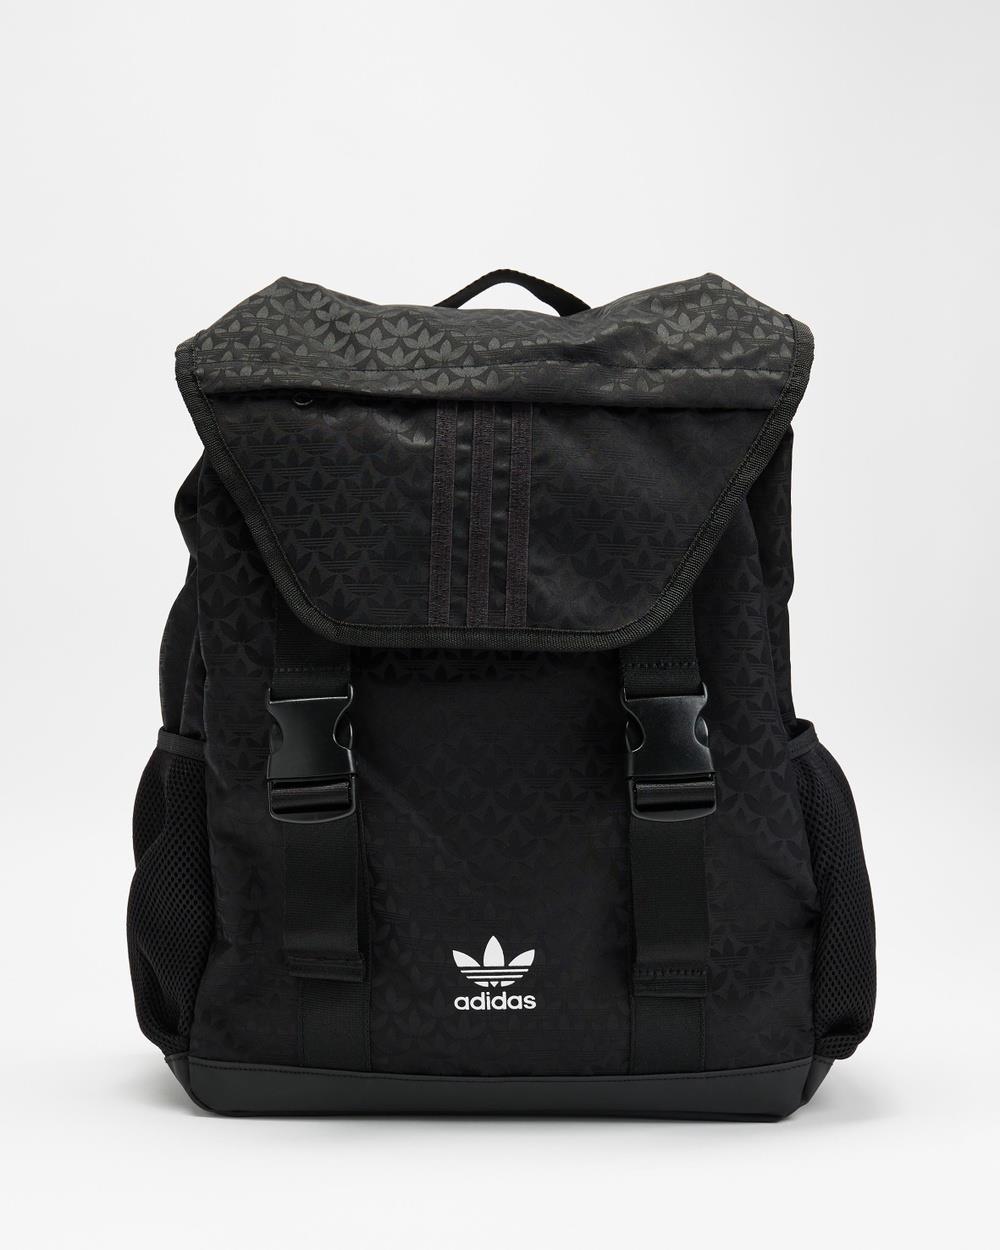 adidas Originals - Trefoil Monogram Jacquard Backpack - Backpacks (Black & White) Trefoil Monogram Jacquard Backpack